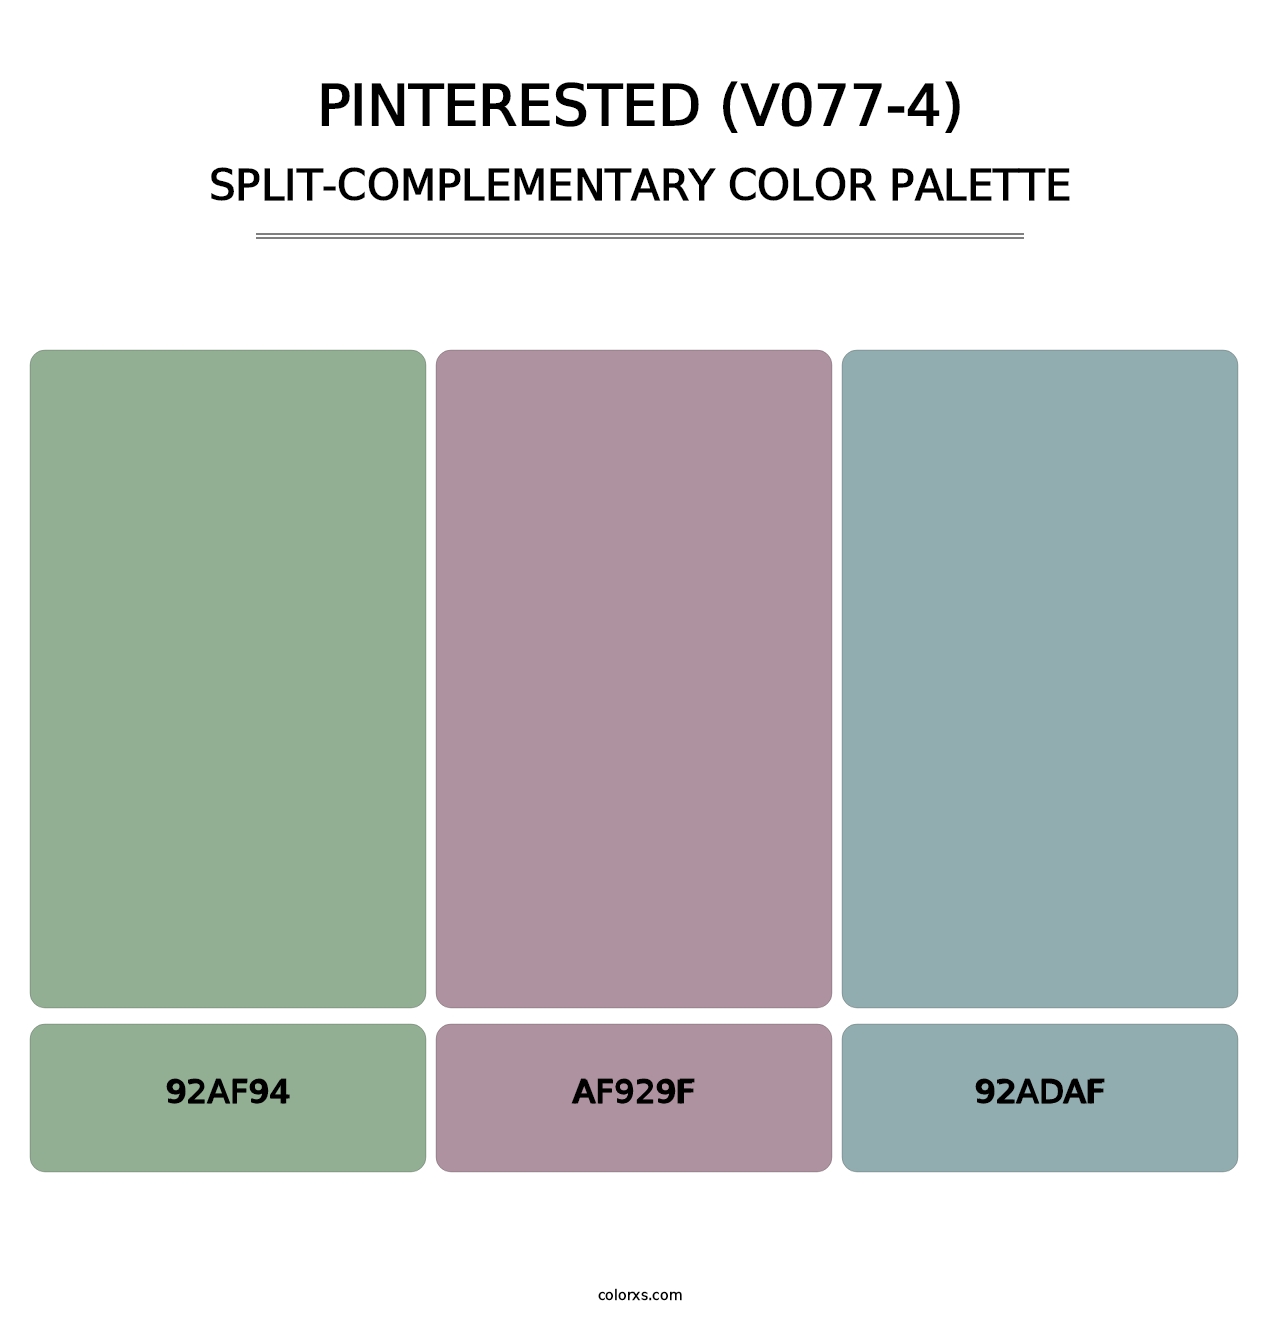 Pinterested (V077-4) - Split-Complementary Color Palette